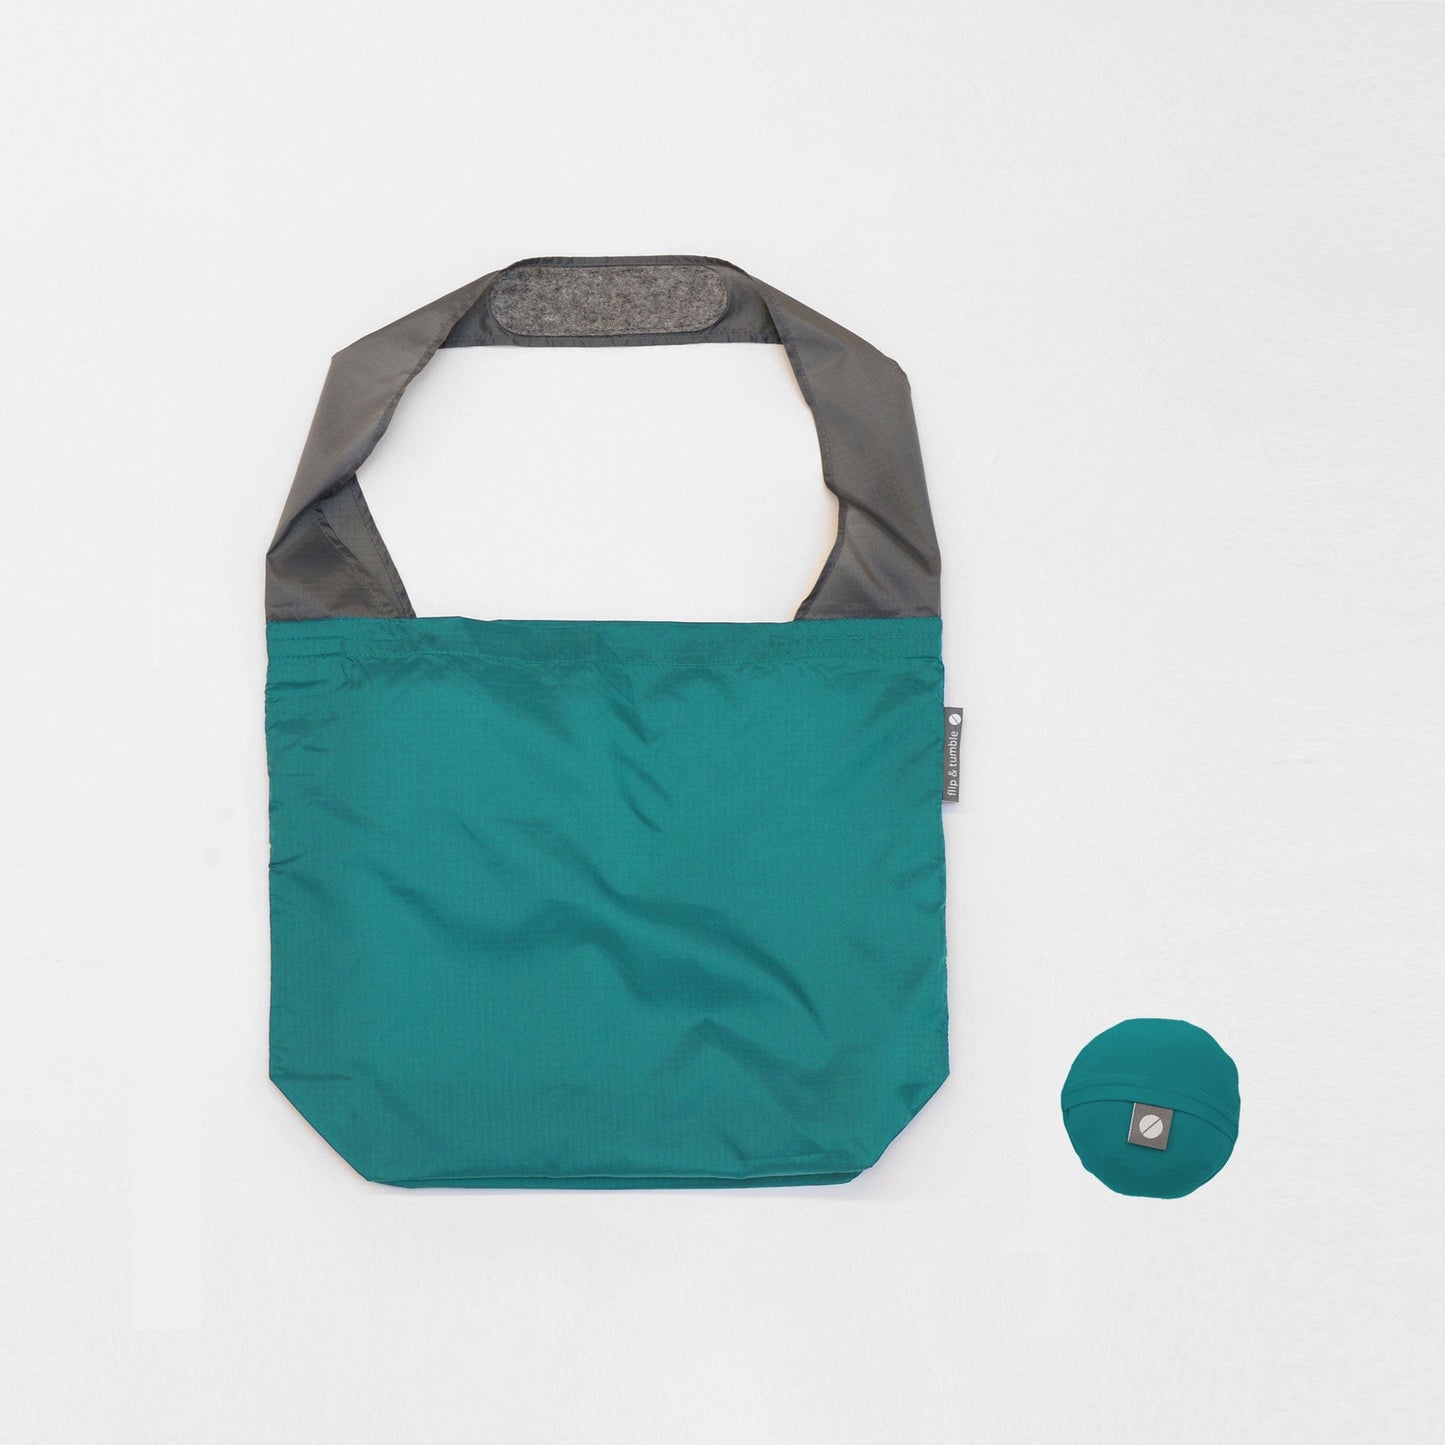 24-7 bag - flip & tumble - packable shopping bag, stylish reusable bag